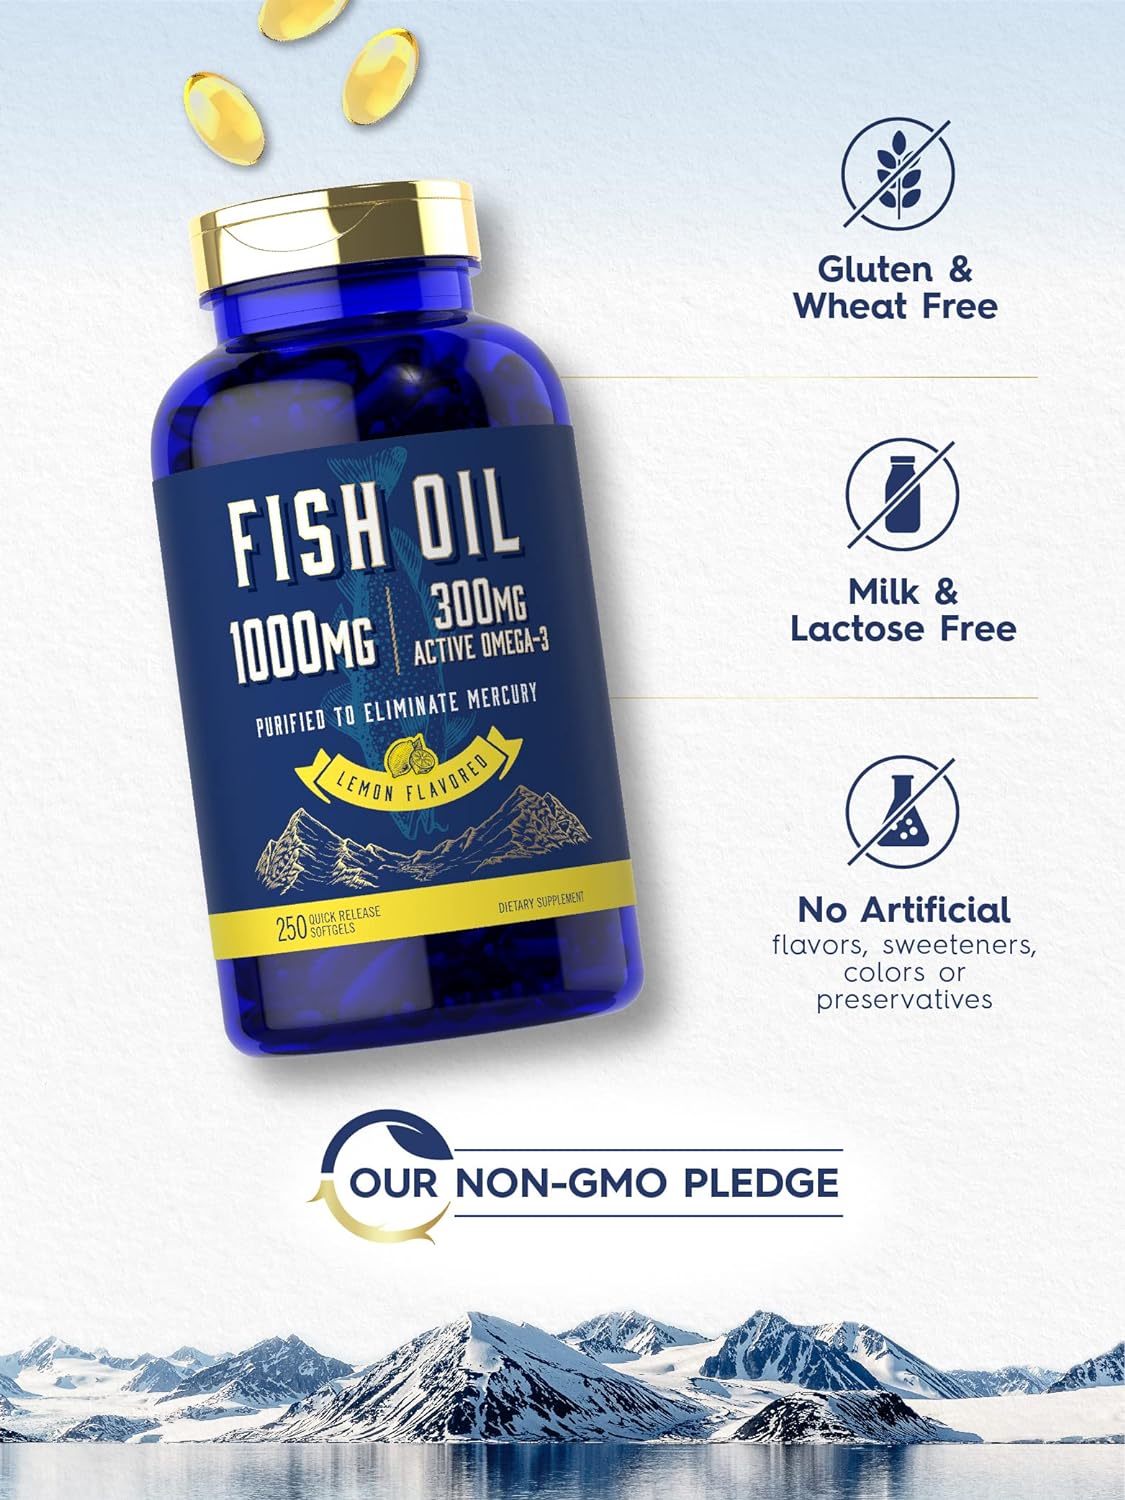 Fish Oil 1000mg | 300mg Omega 3 | 250 Count | Non-GMO and Gluten Free 